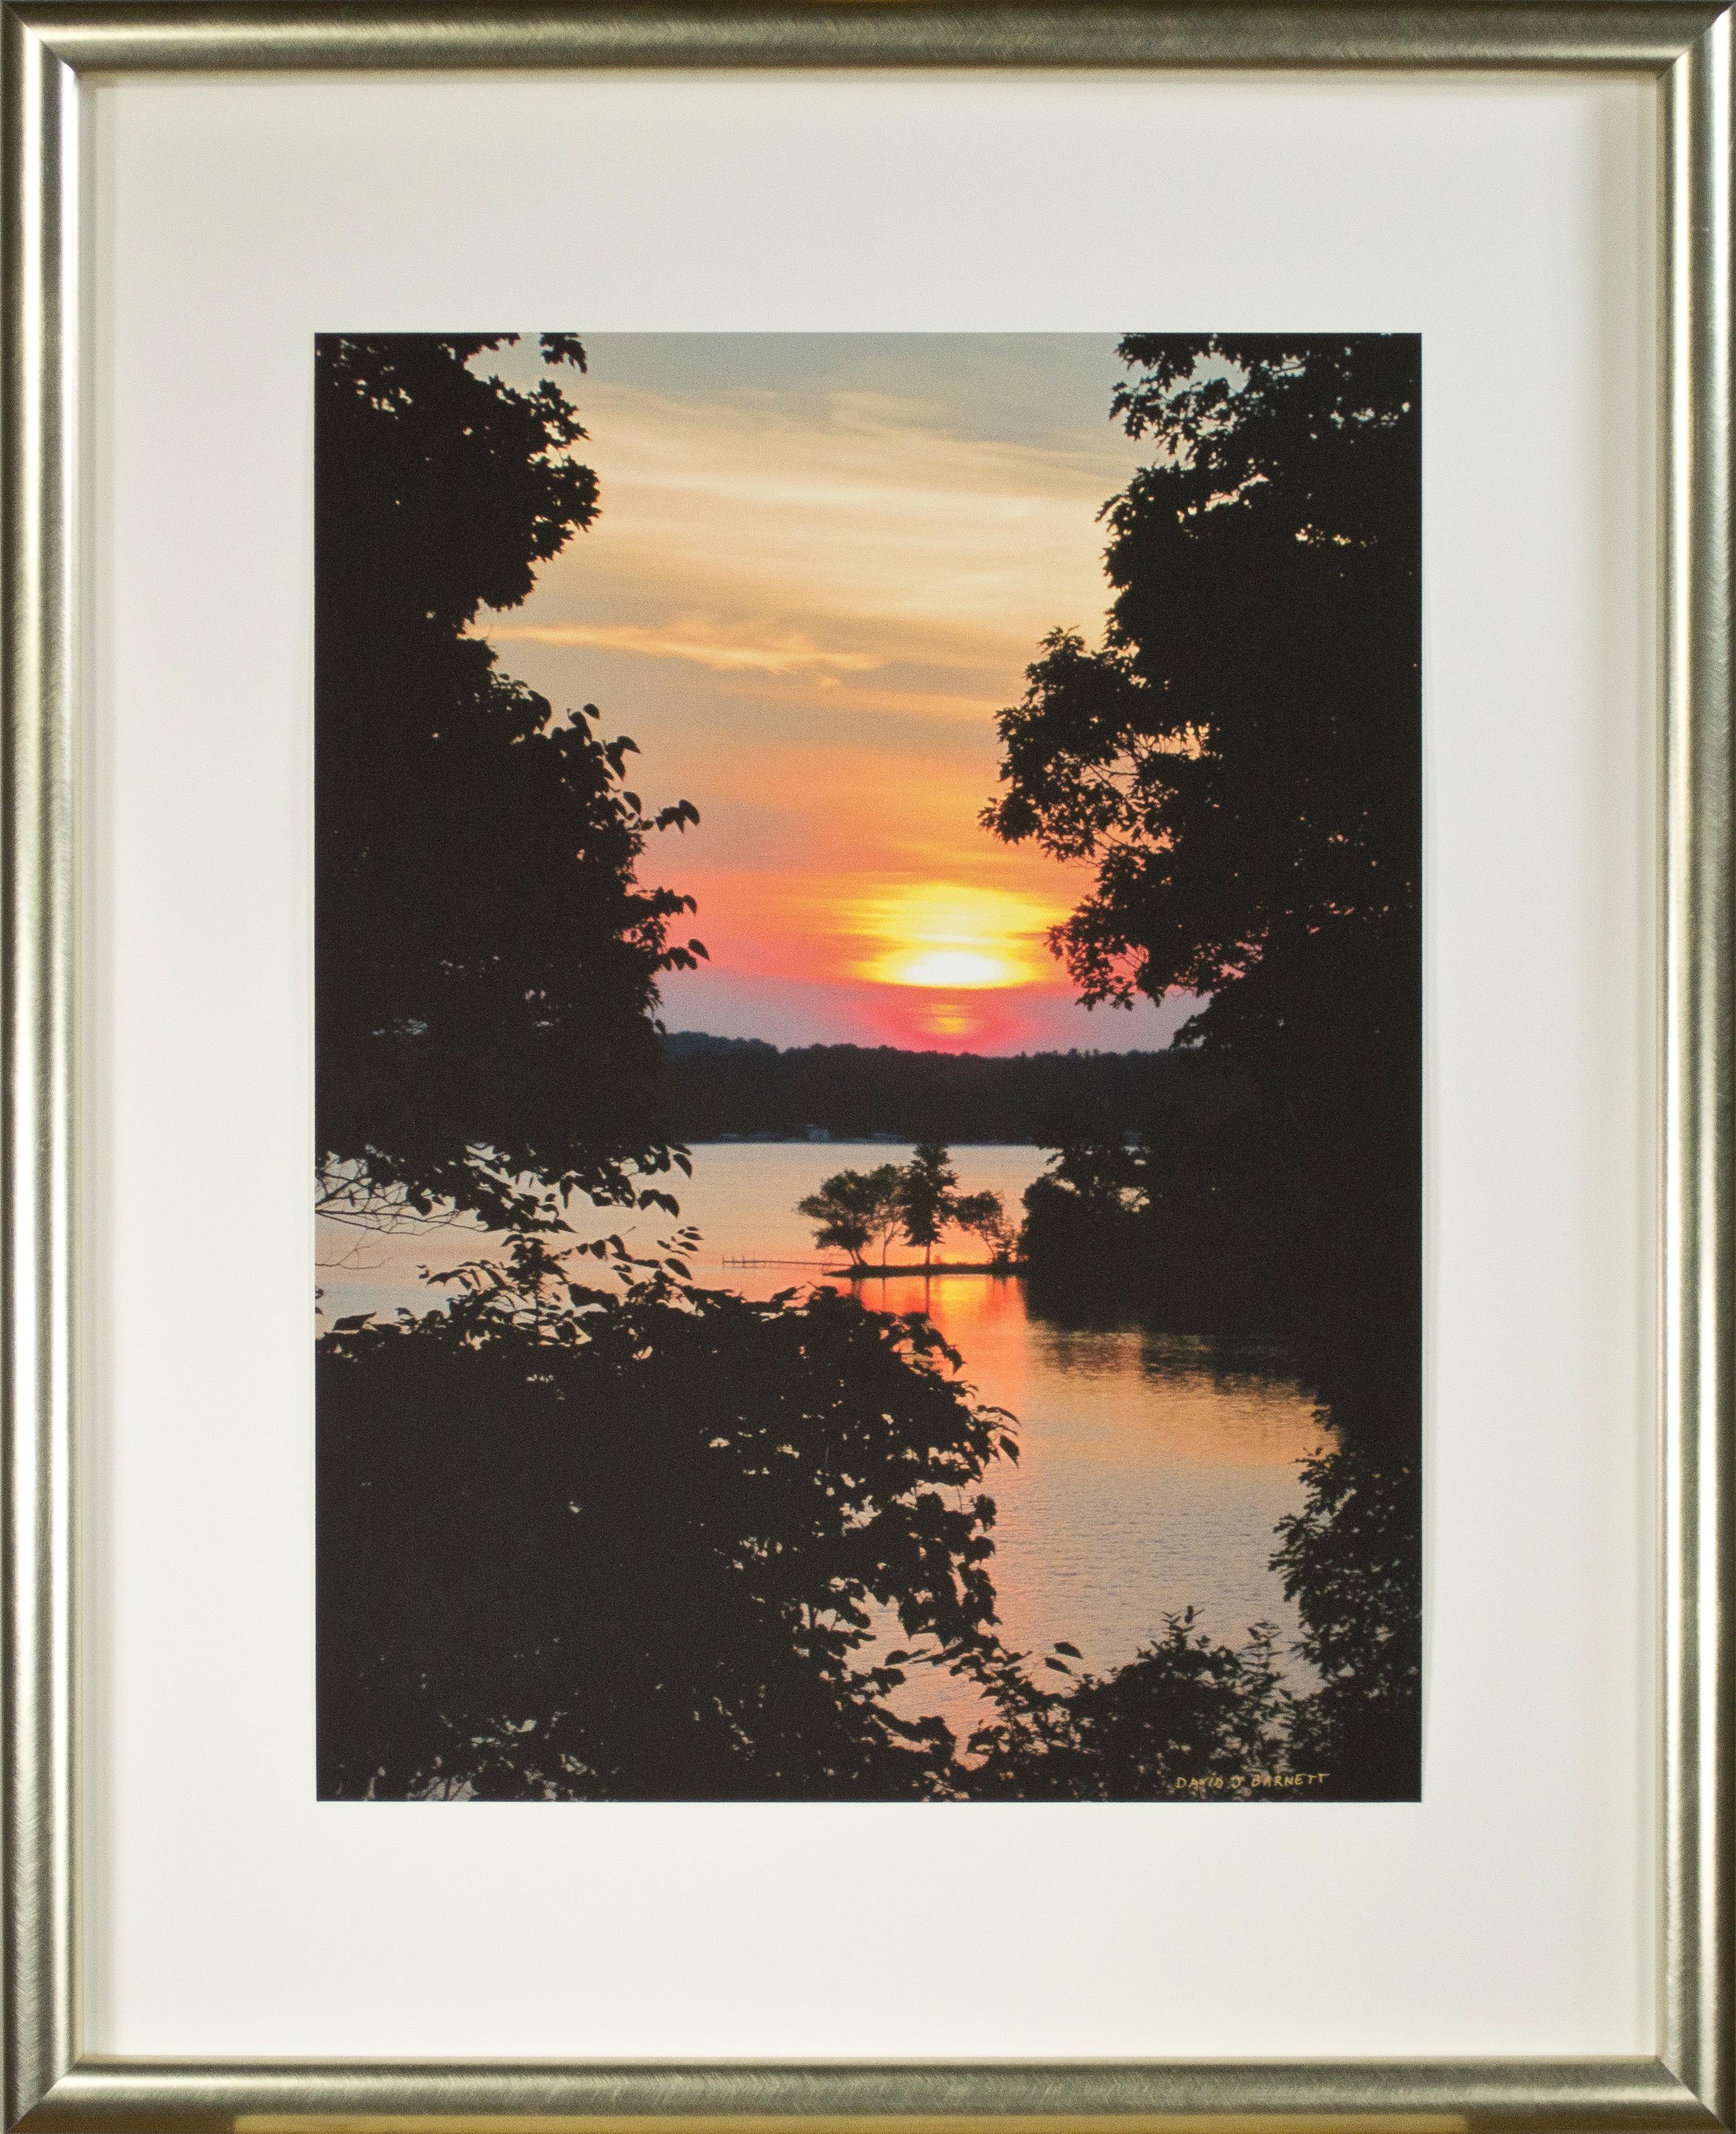 David Barnett Landscape Photograph - 'Beaver Lake Sunrise, Aug. 2016' original signed fine art photograph 